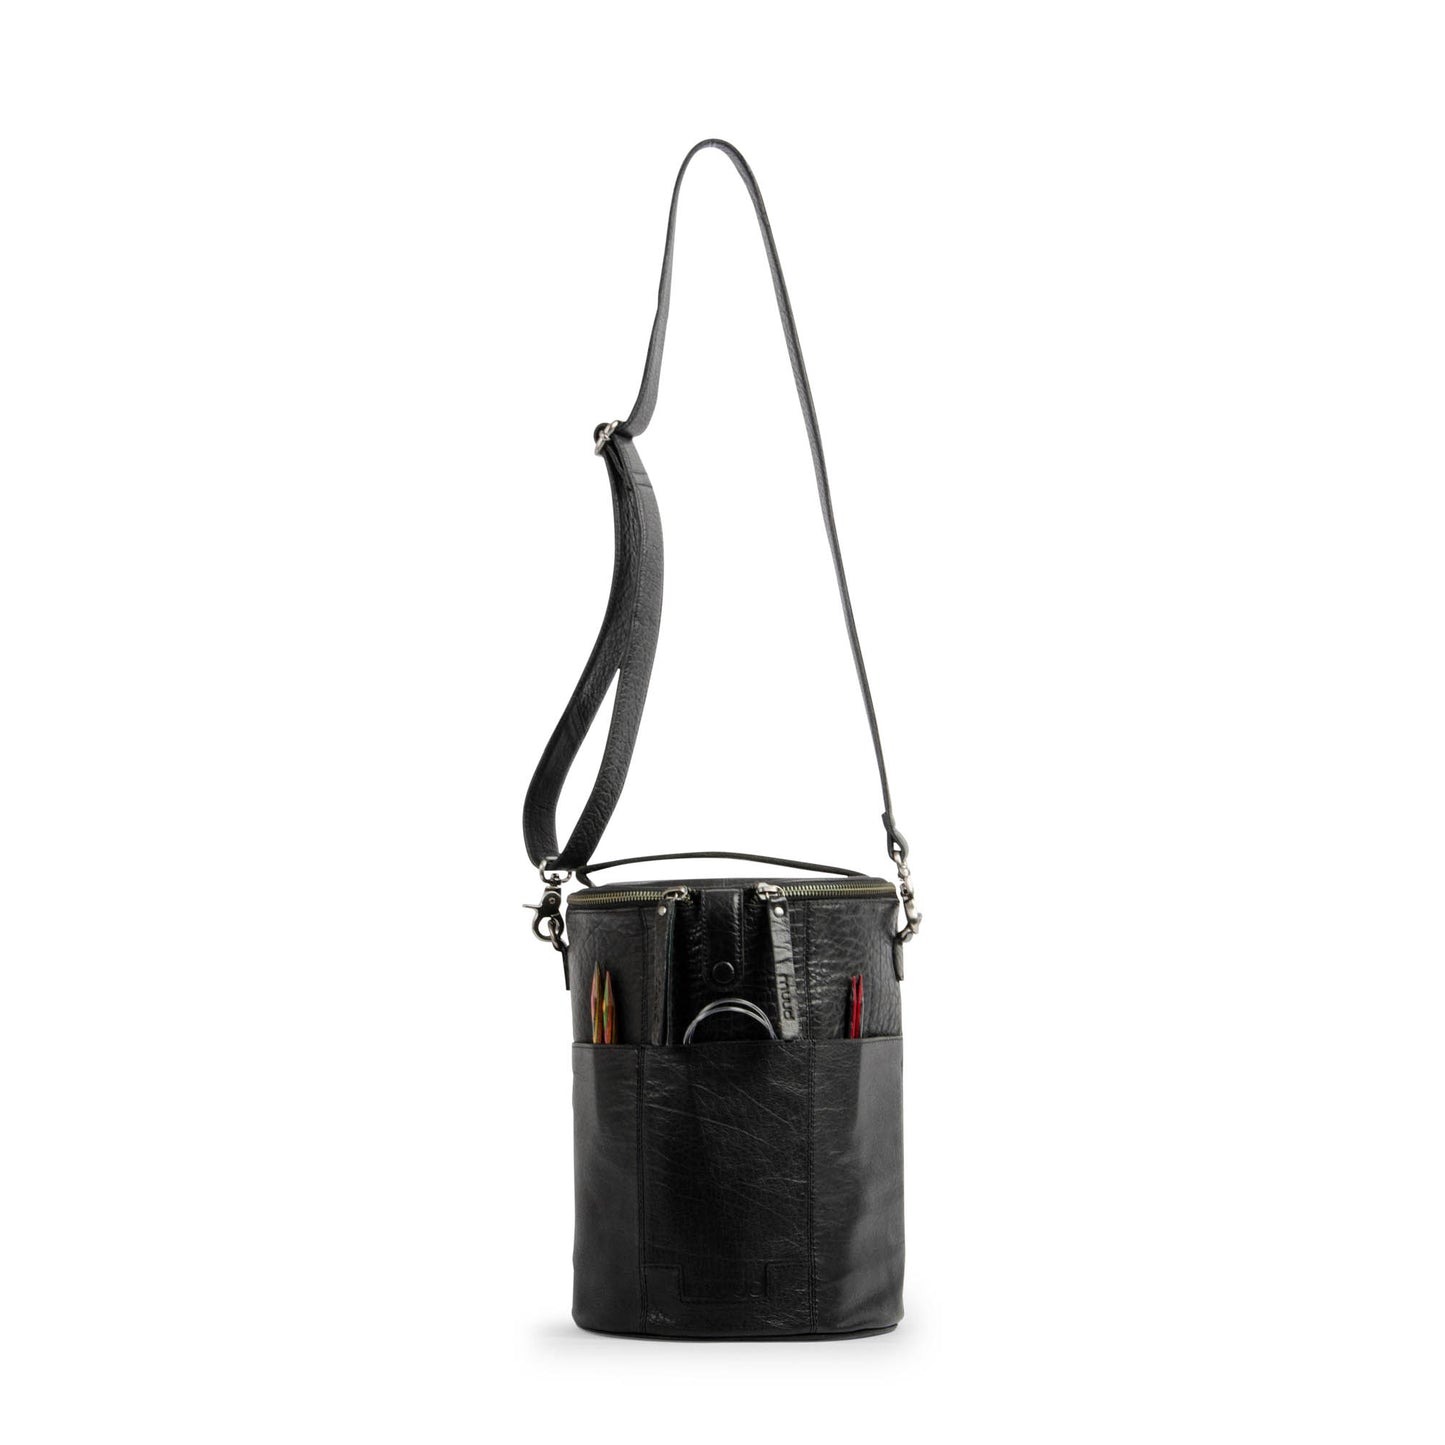 MUUD Saturn XL Handmade Leather Bag Knit Bag Toiletry Bag Scissor Bag